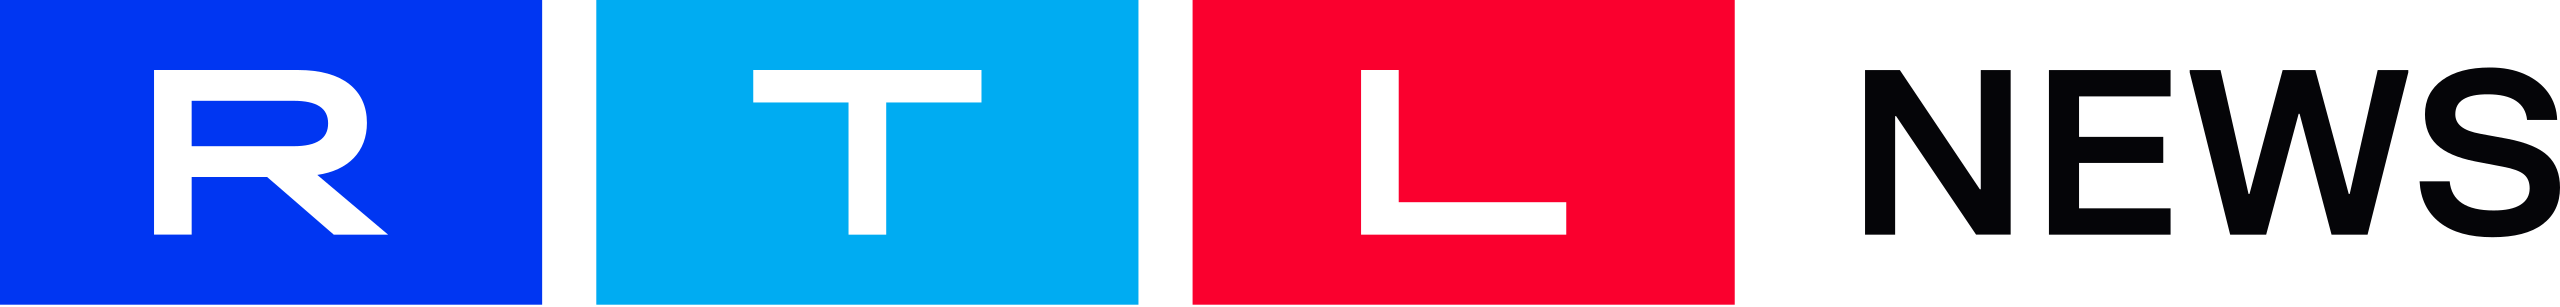 RTL_News_Logo_09.2021.svg